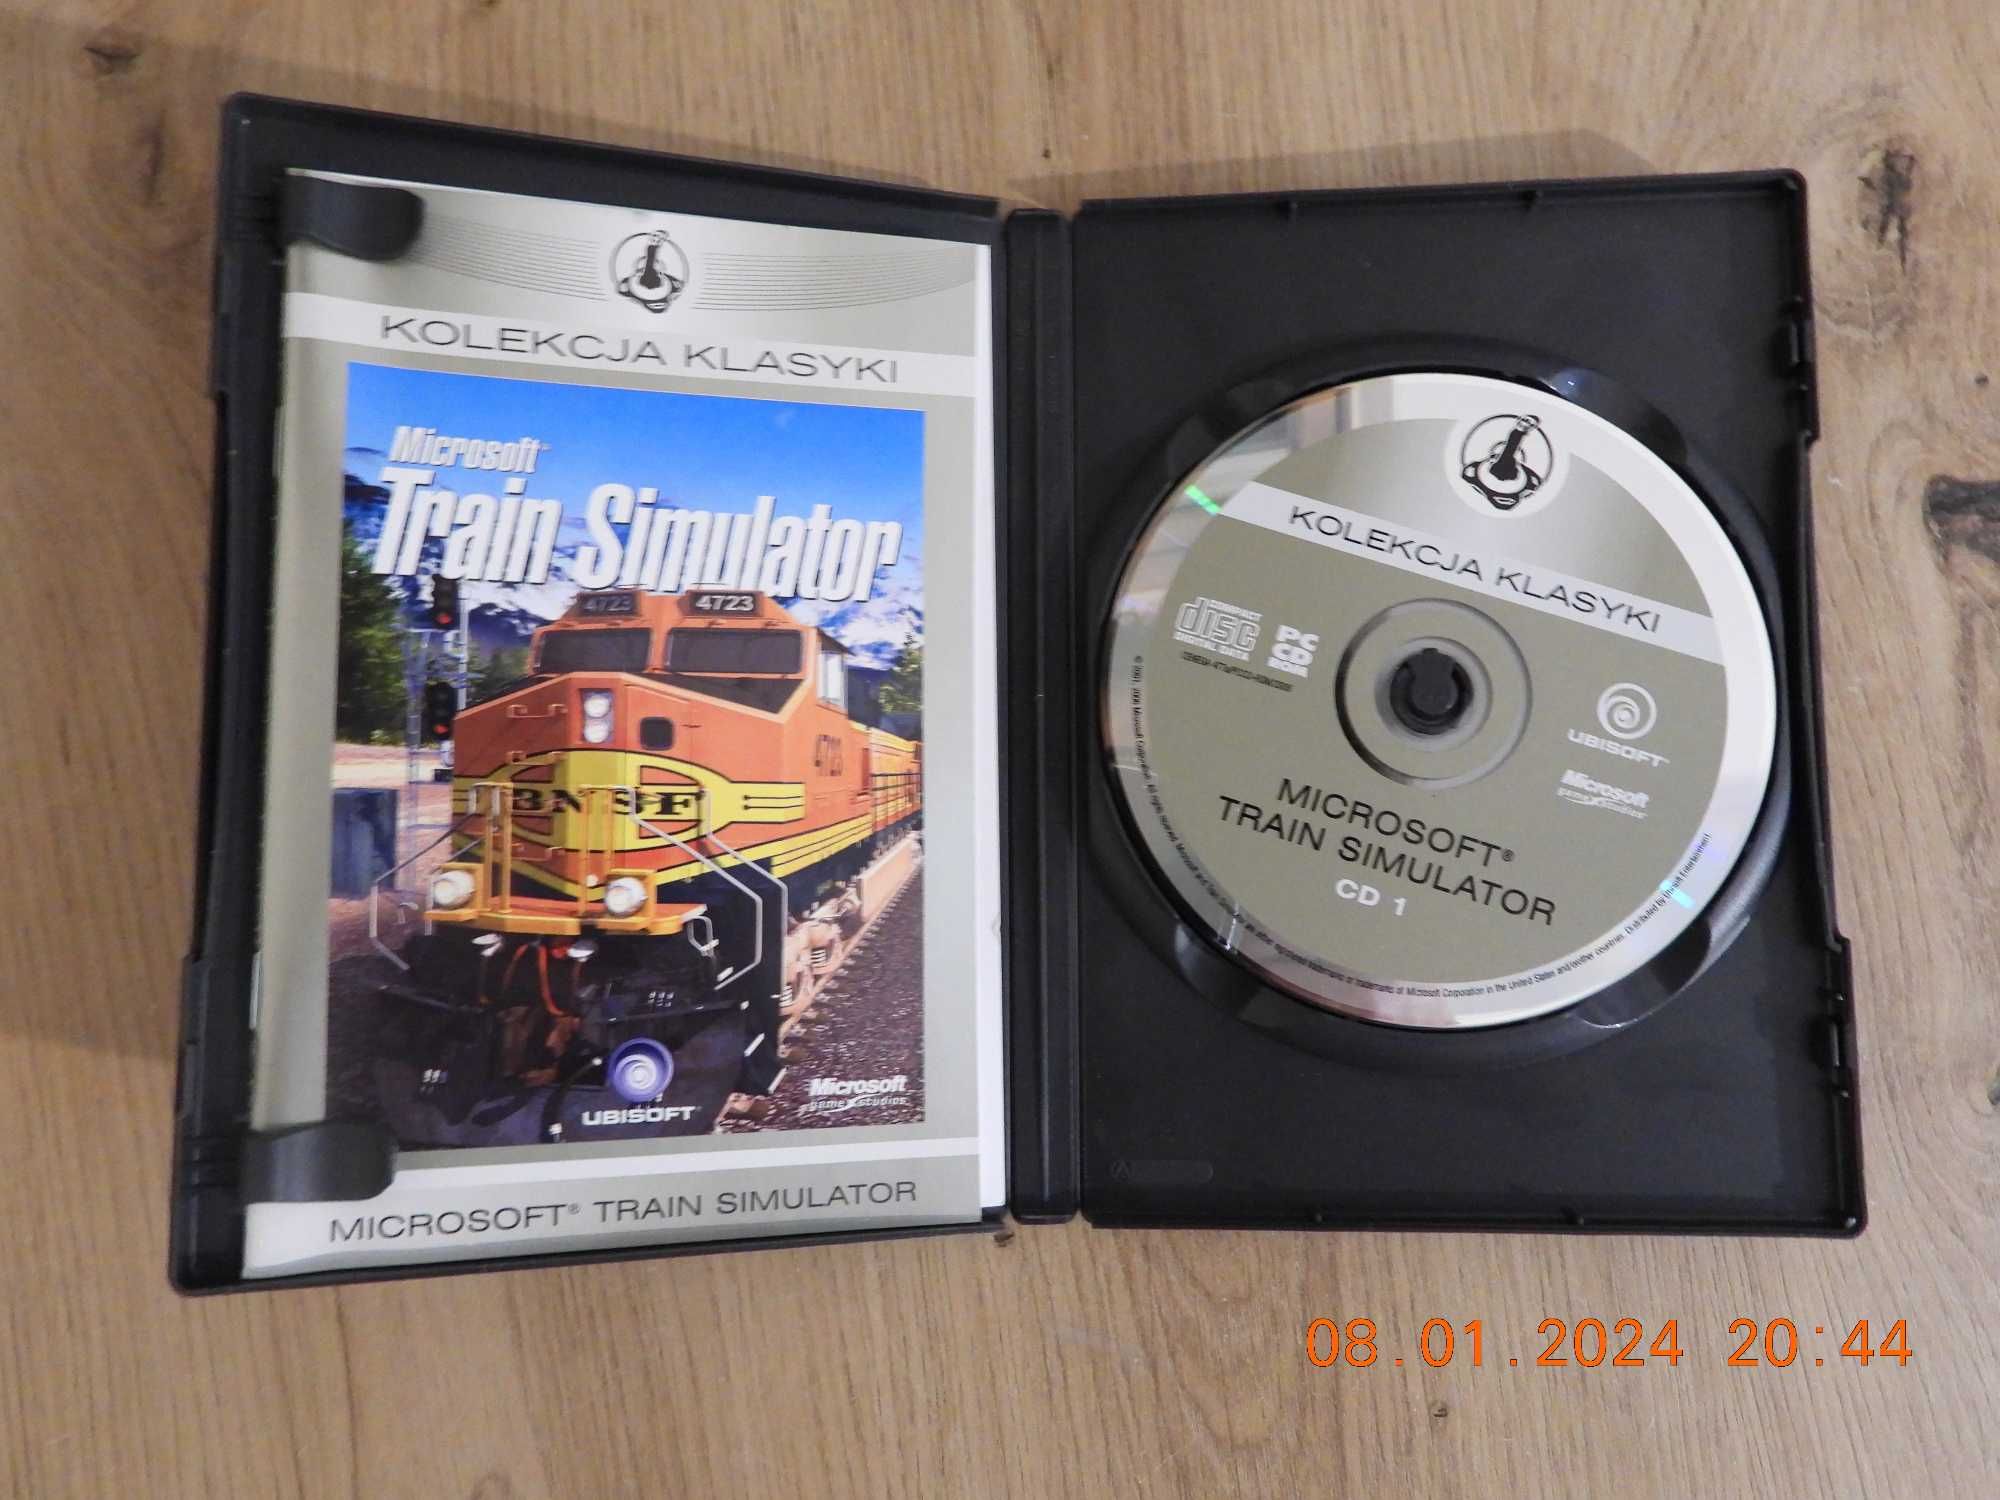 Microsoft Train Simulator. Wersja pudełkowa, Kolekcja klasyki PL - PC